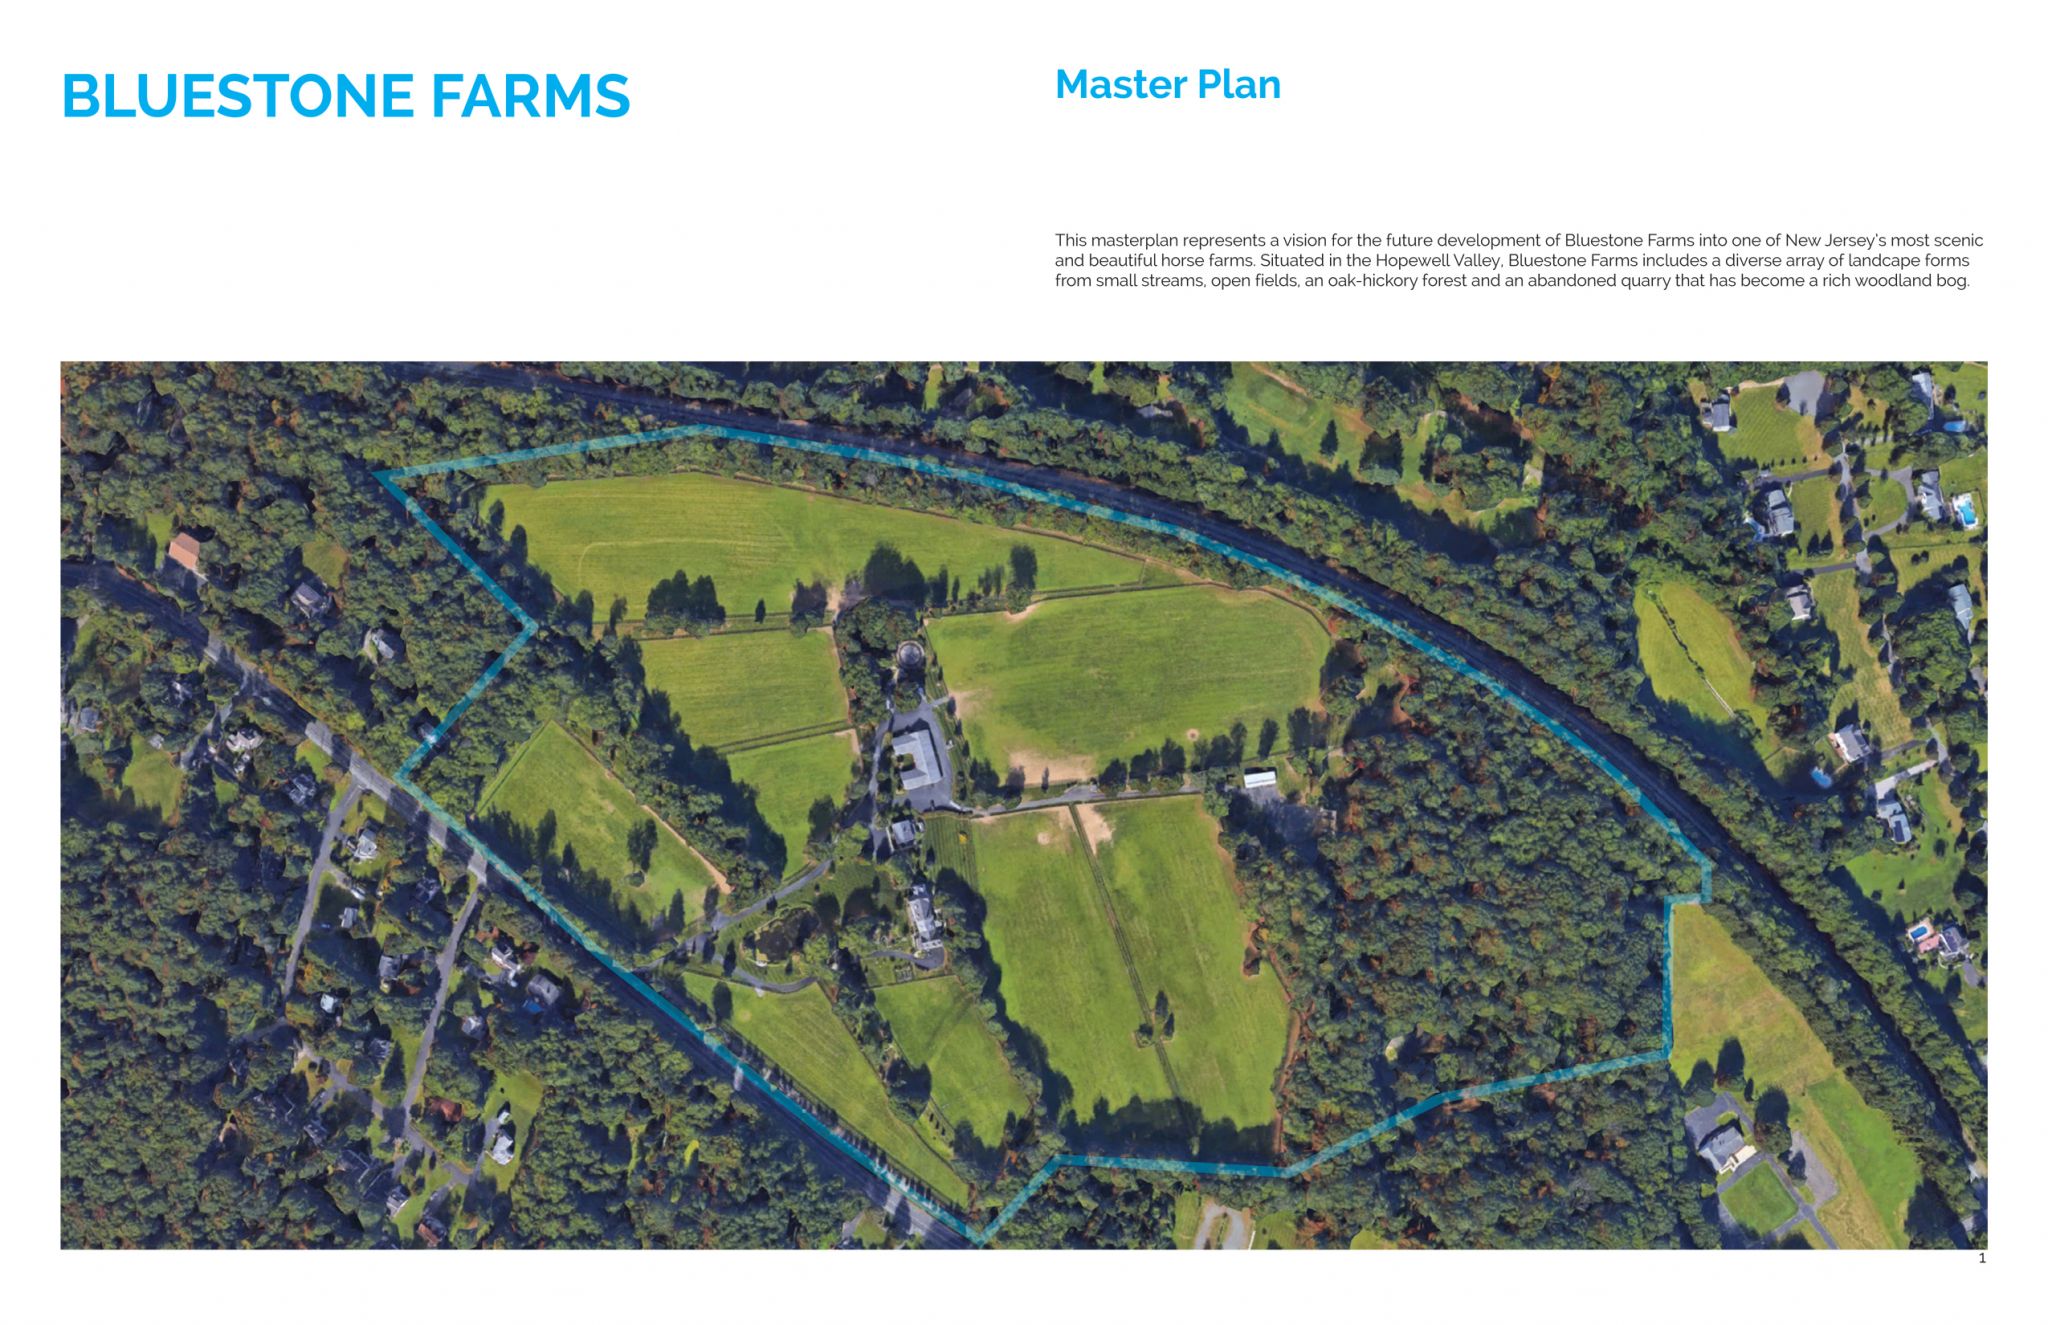 Bluestone-Farm_Masterplan_1.jpg